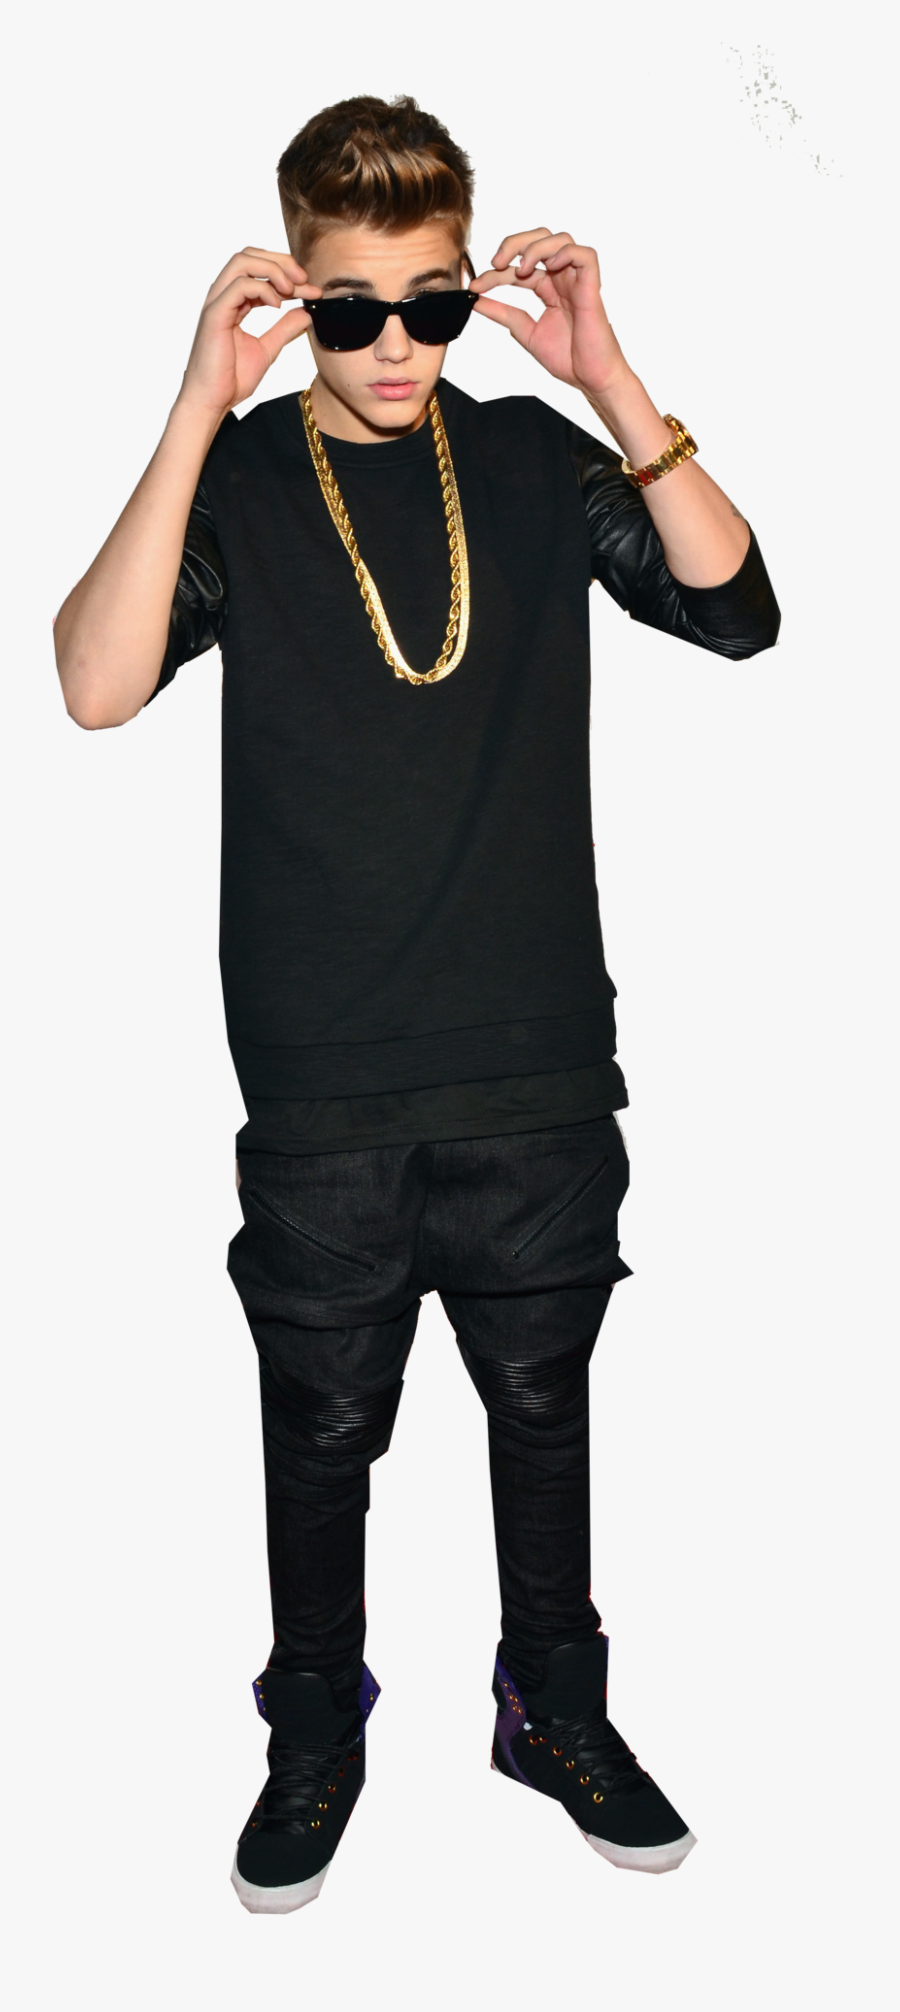 Download Justin Bieber Png Clipart - Justin Bieber Costume, Transparent Clipart